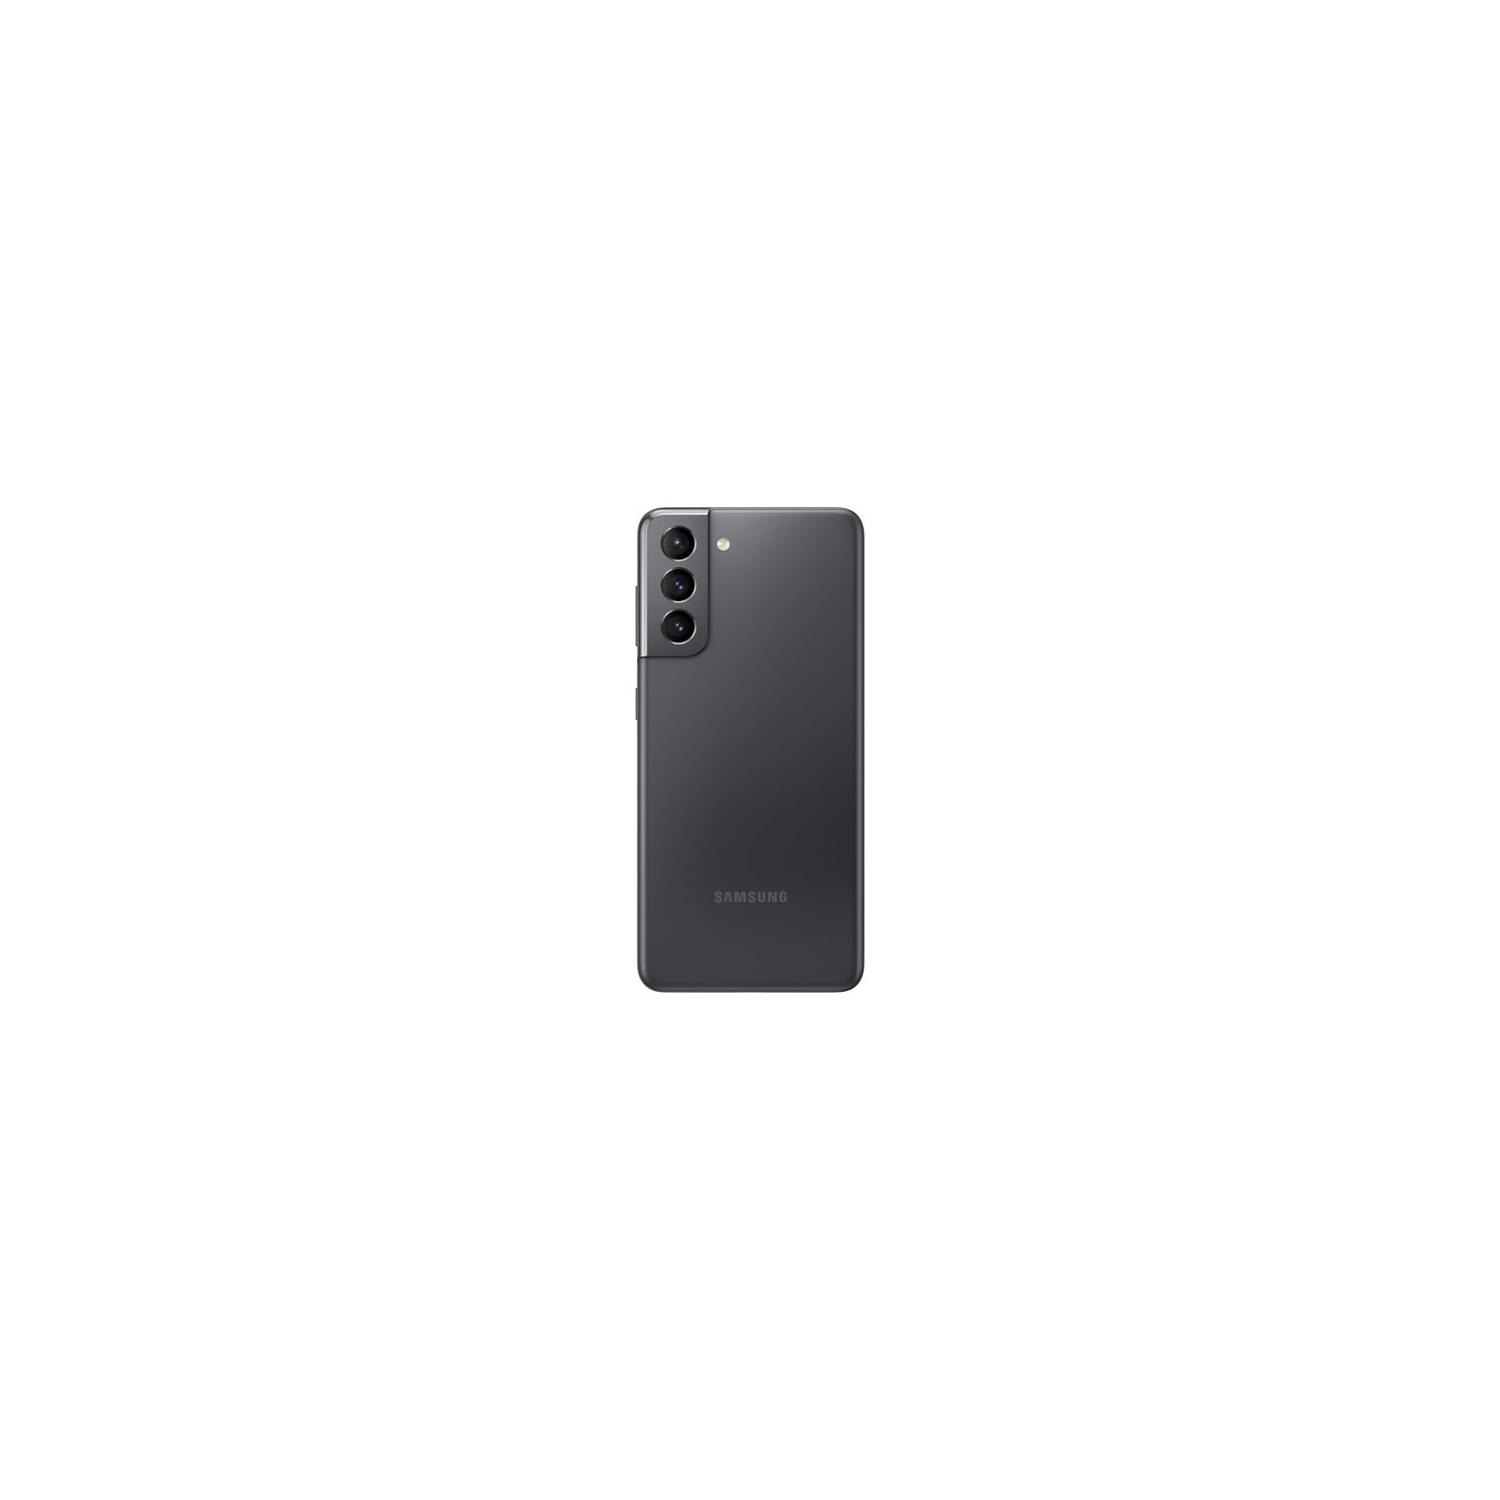 Refurbished (Fair) - Samsung Galaxy S21 128GB Smartphone - Phantom Grey - Unlocked